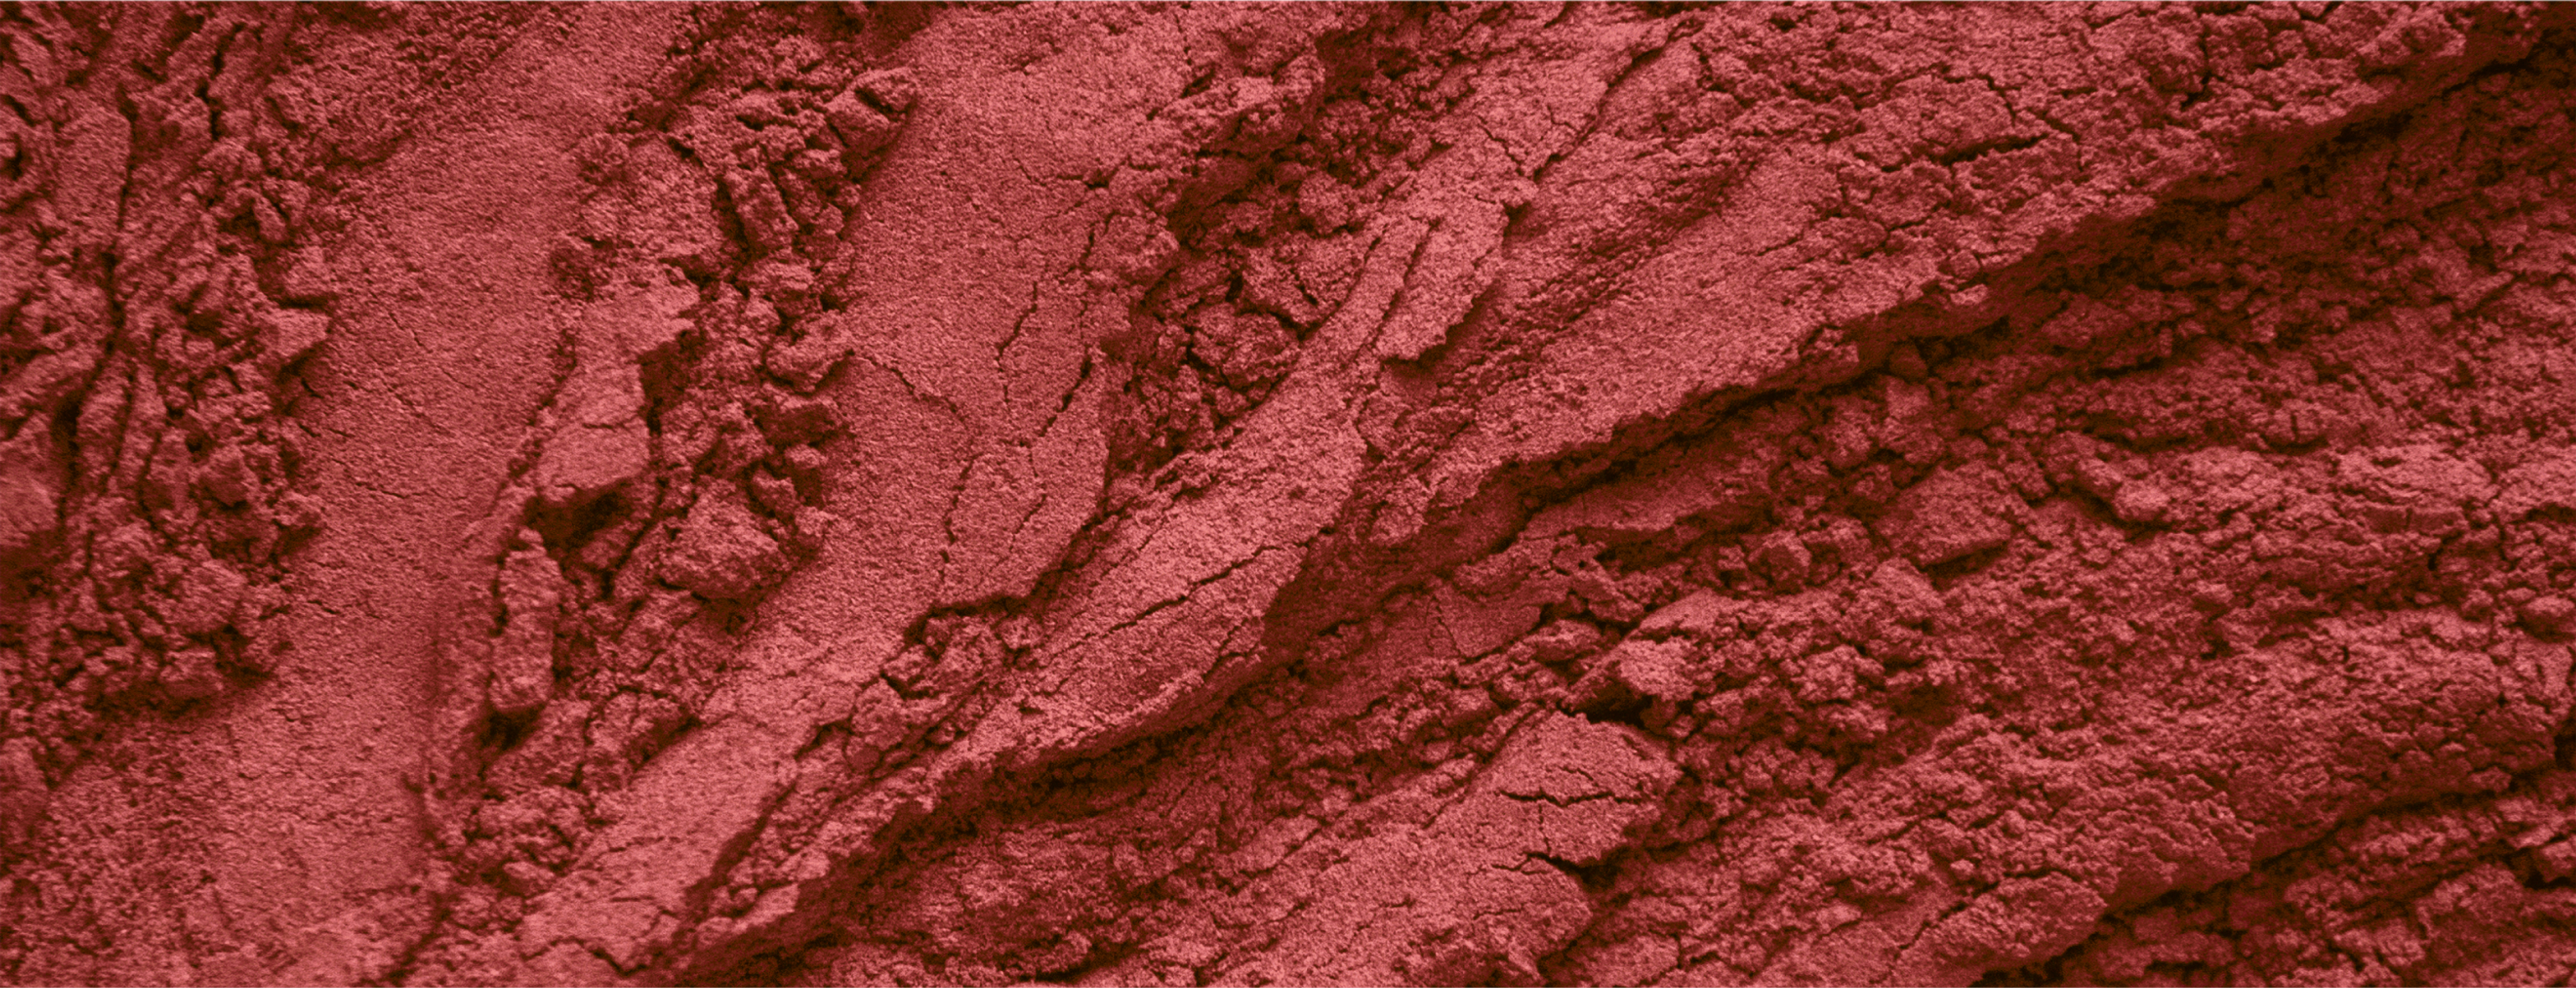 Pomegranate extract powder texture